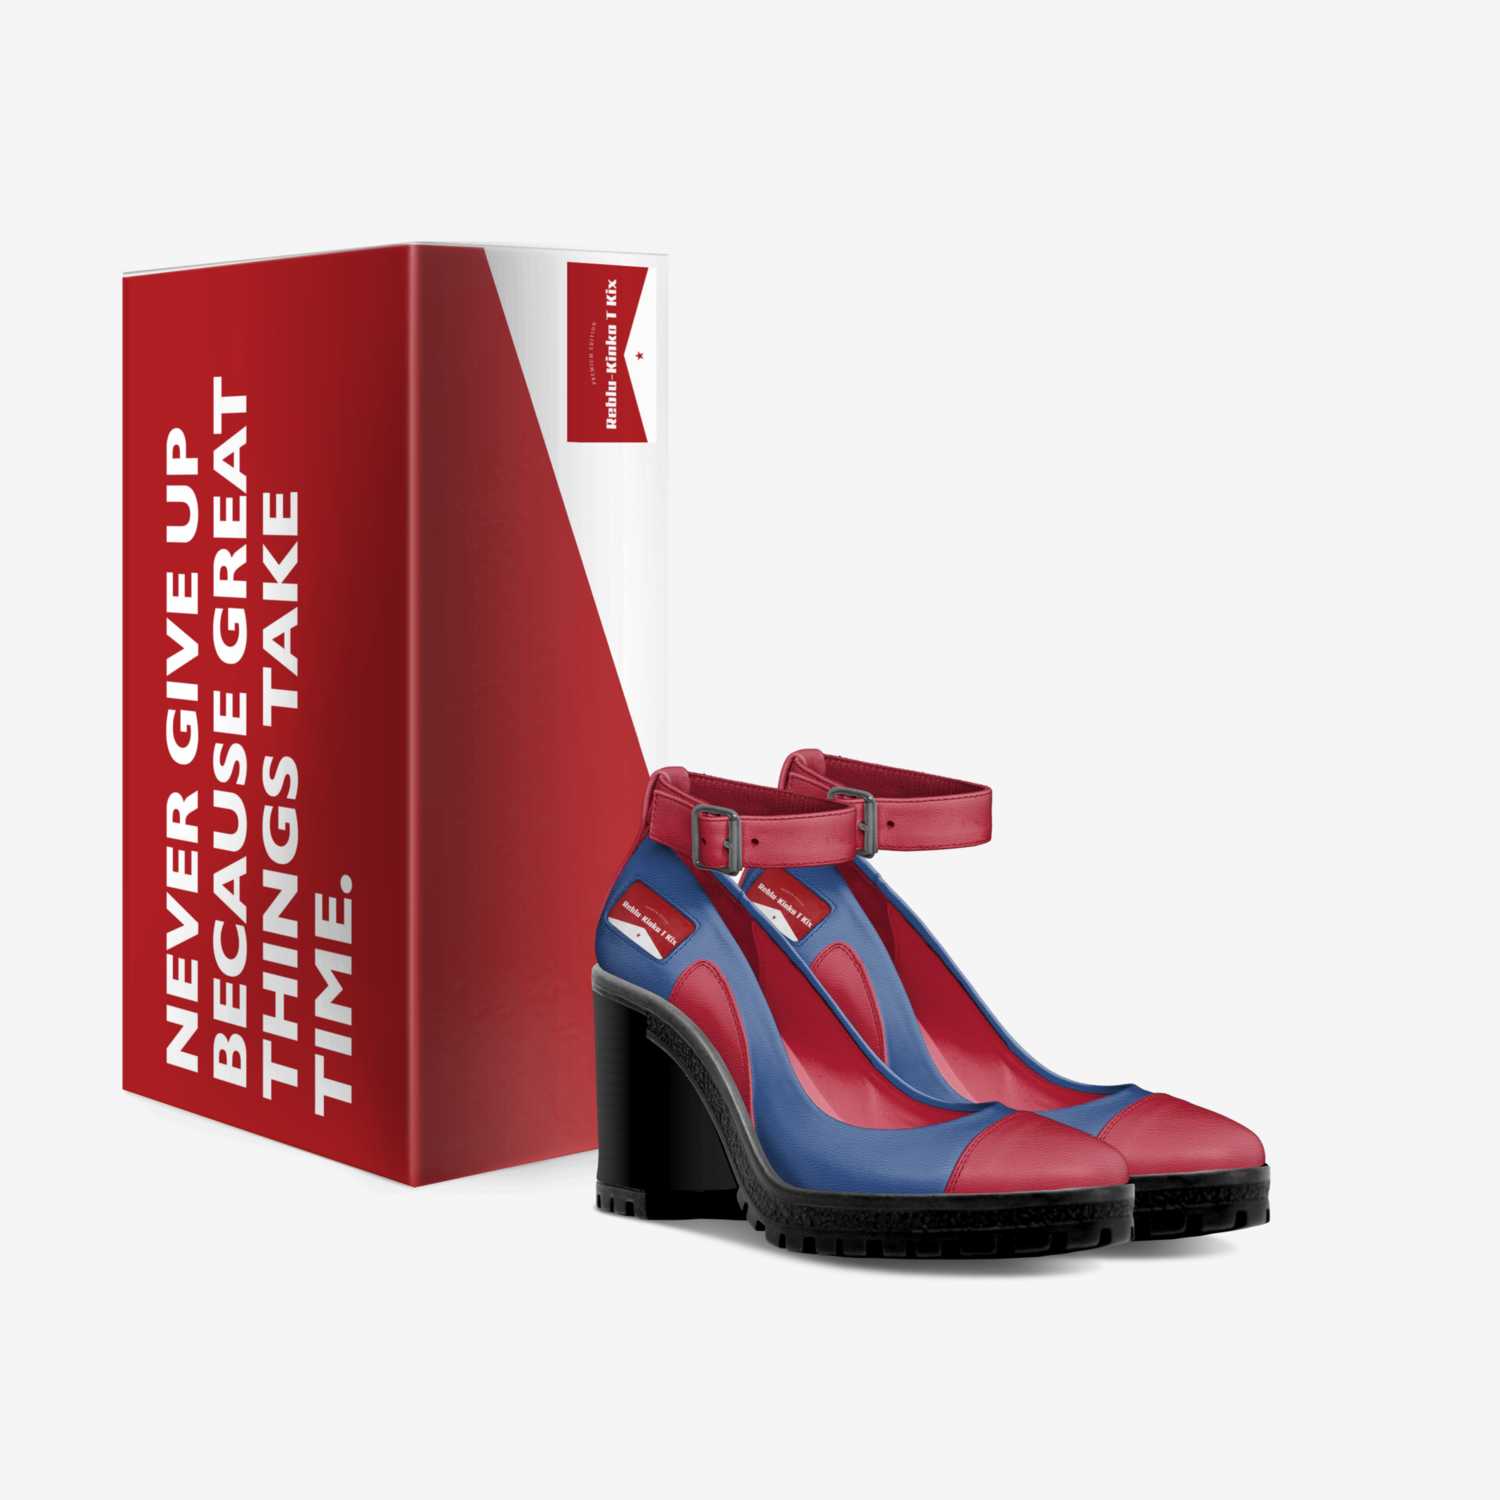 Reblu-Kinka T Kix custom made in Italy shoes by Kinka T Kix | Box view